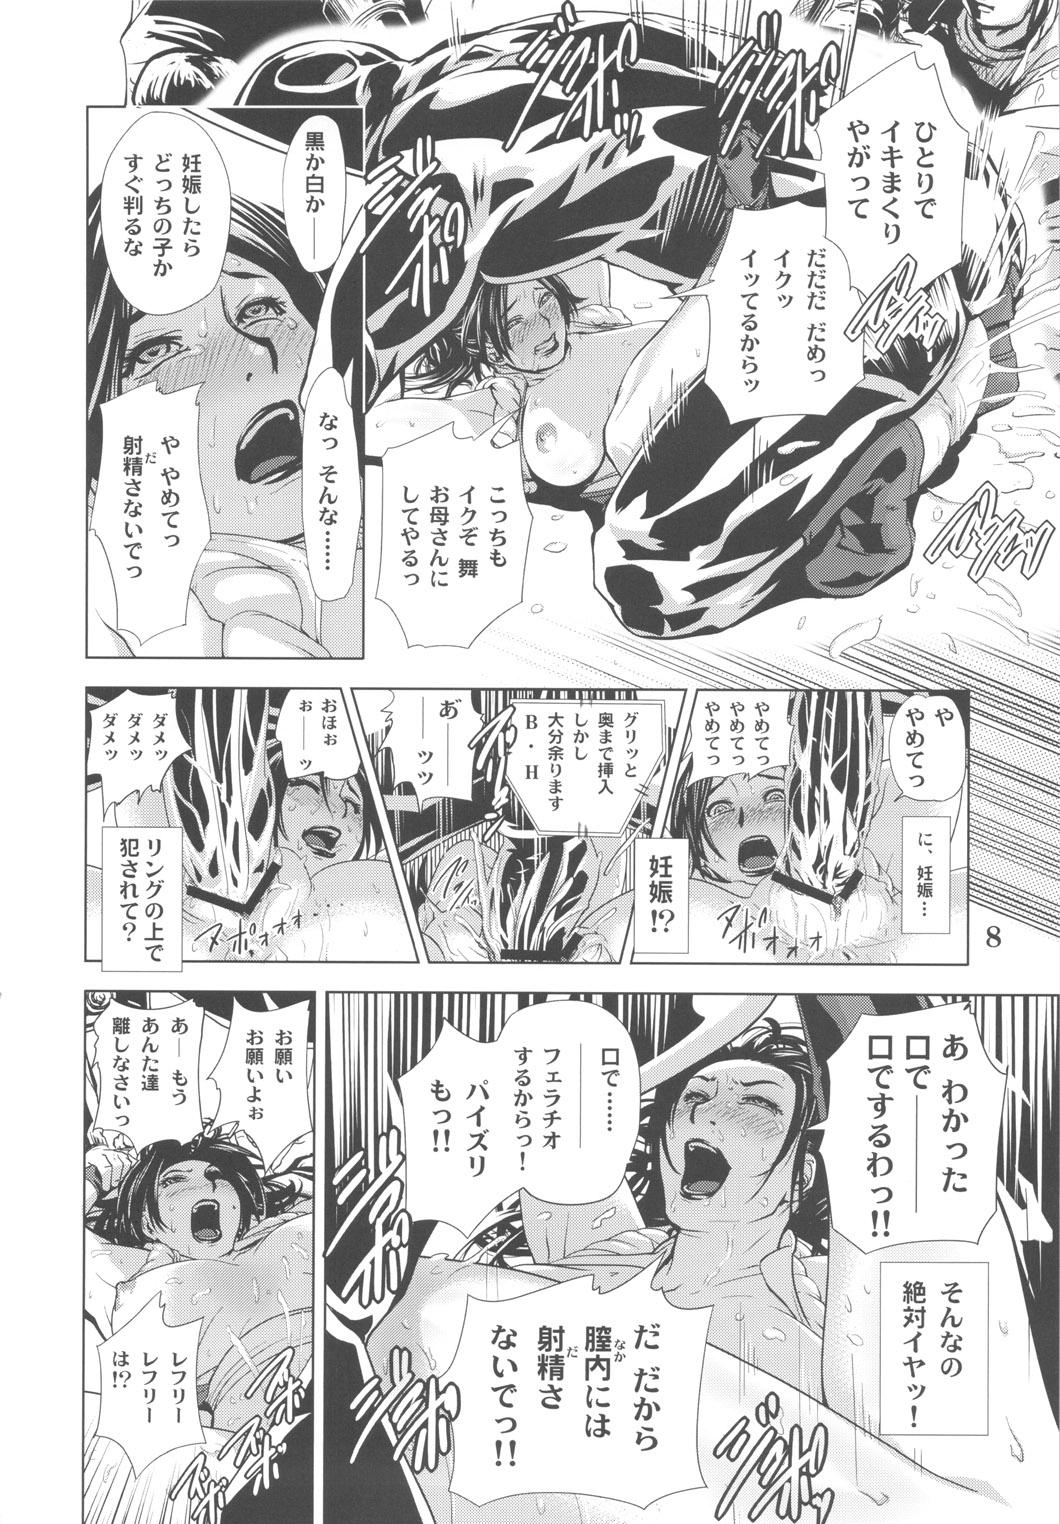 Arab Yojigen Sappou Combi vs Shiranui Mai Round 3 - King of fighters Kinnikuman Movie - Page 7